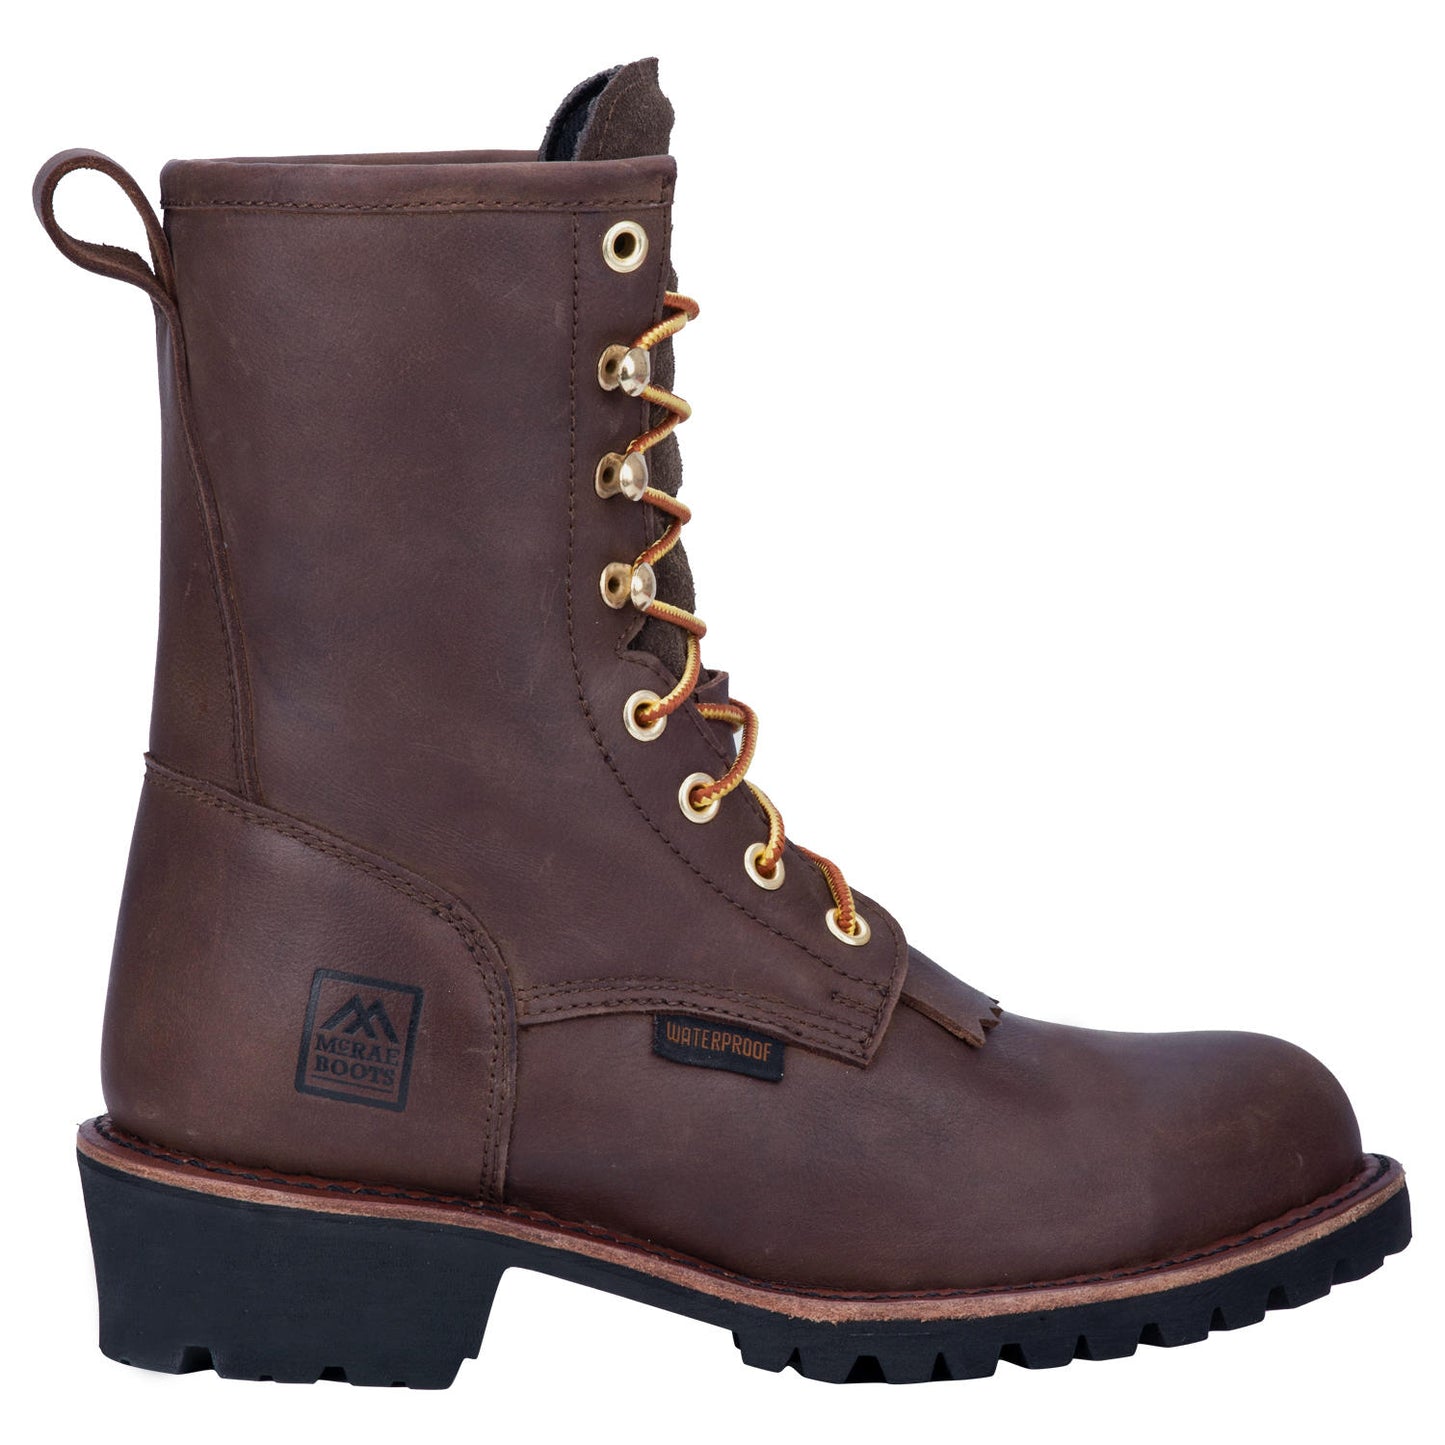 McRae Tree Line Steel Toe Waterproof Brown Lace-Up Boots MR89394